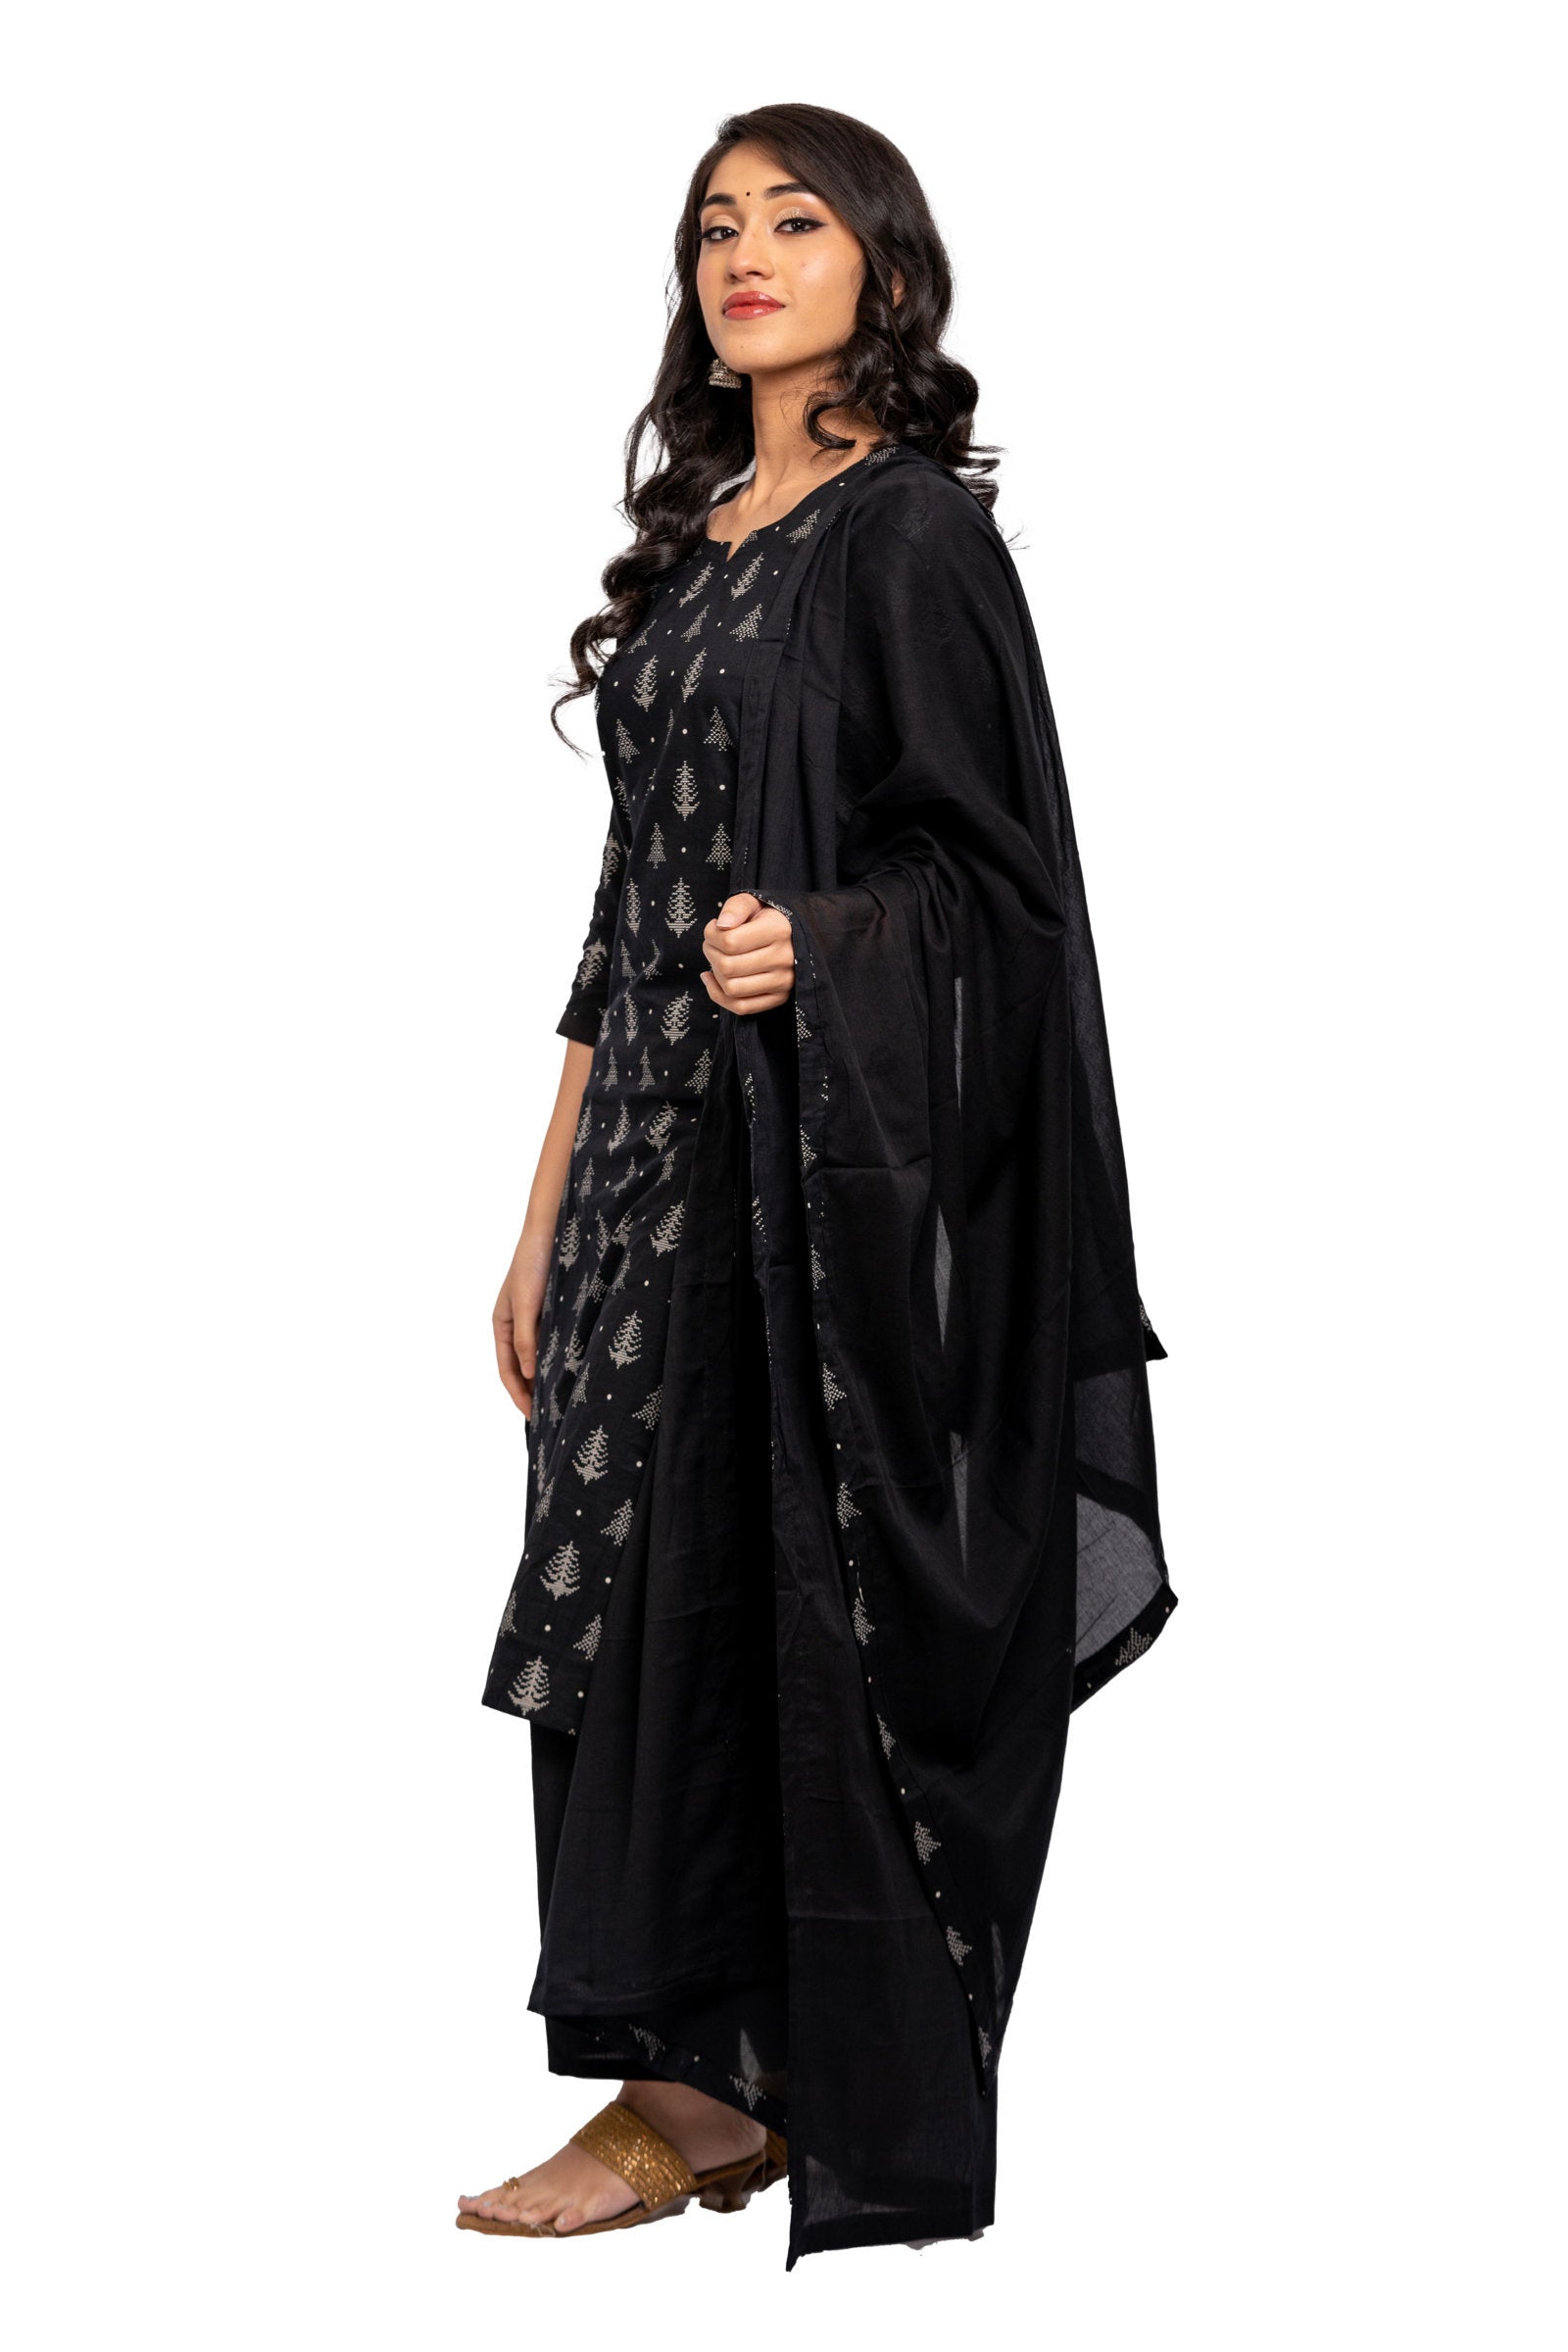 3 Piece Salwar - 100% Cotton black salwar with white prints. Plain black 2 metre long dupatta with edge design matching the salwar fabric. Plain black pants matching the dupatta.